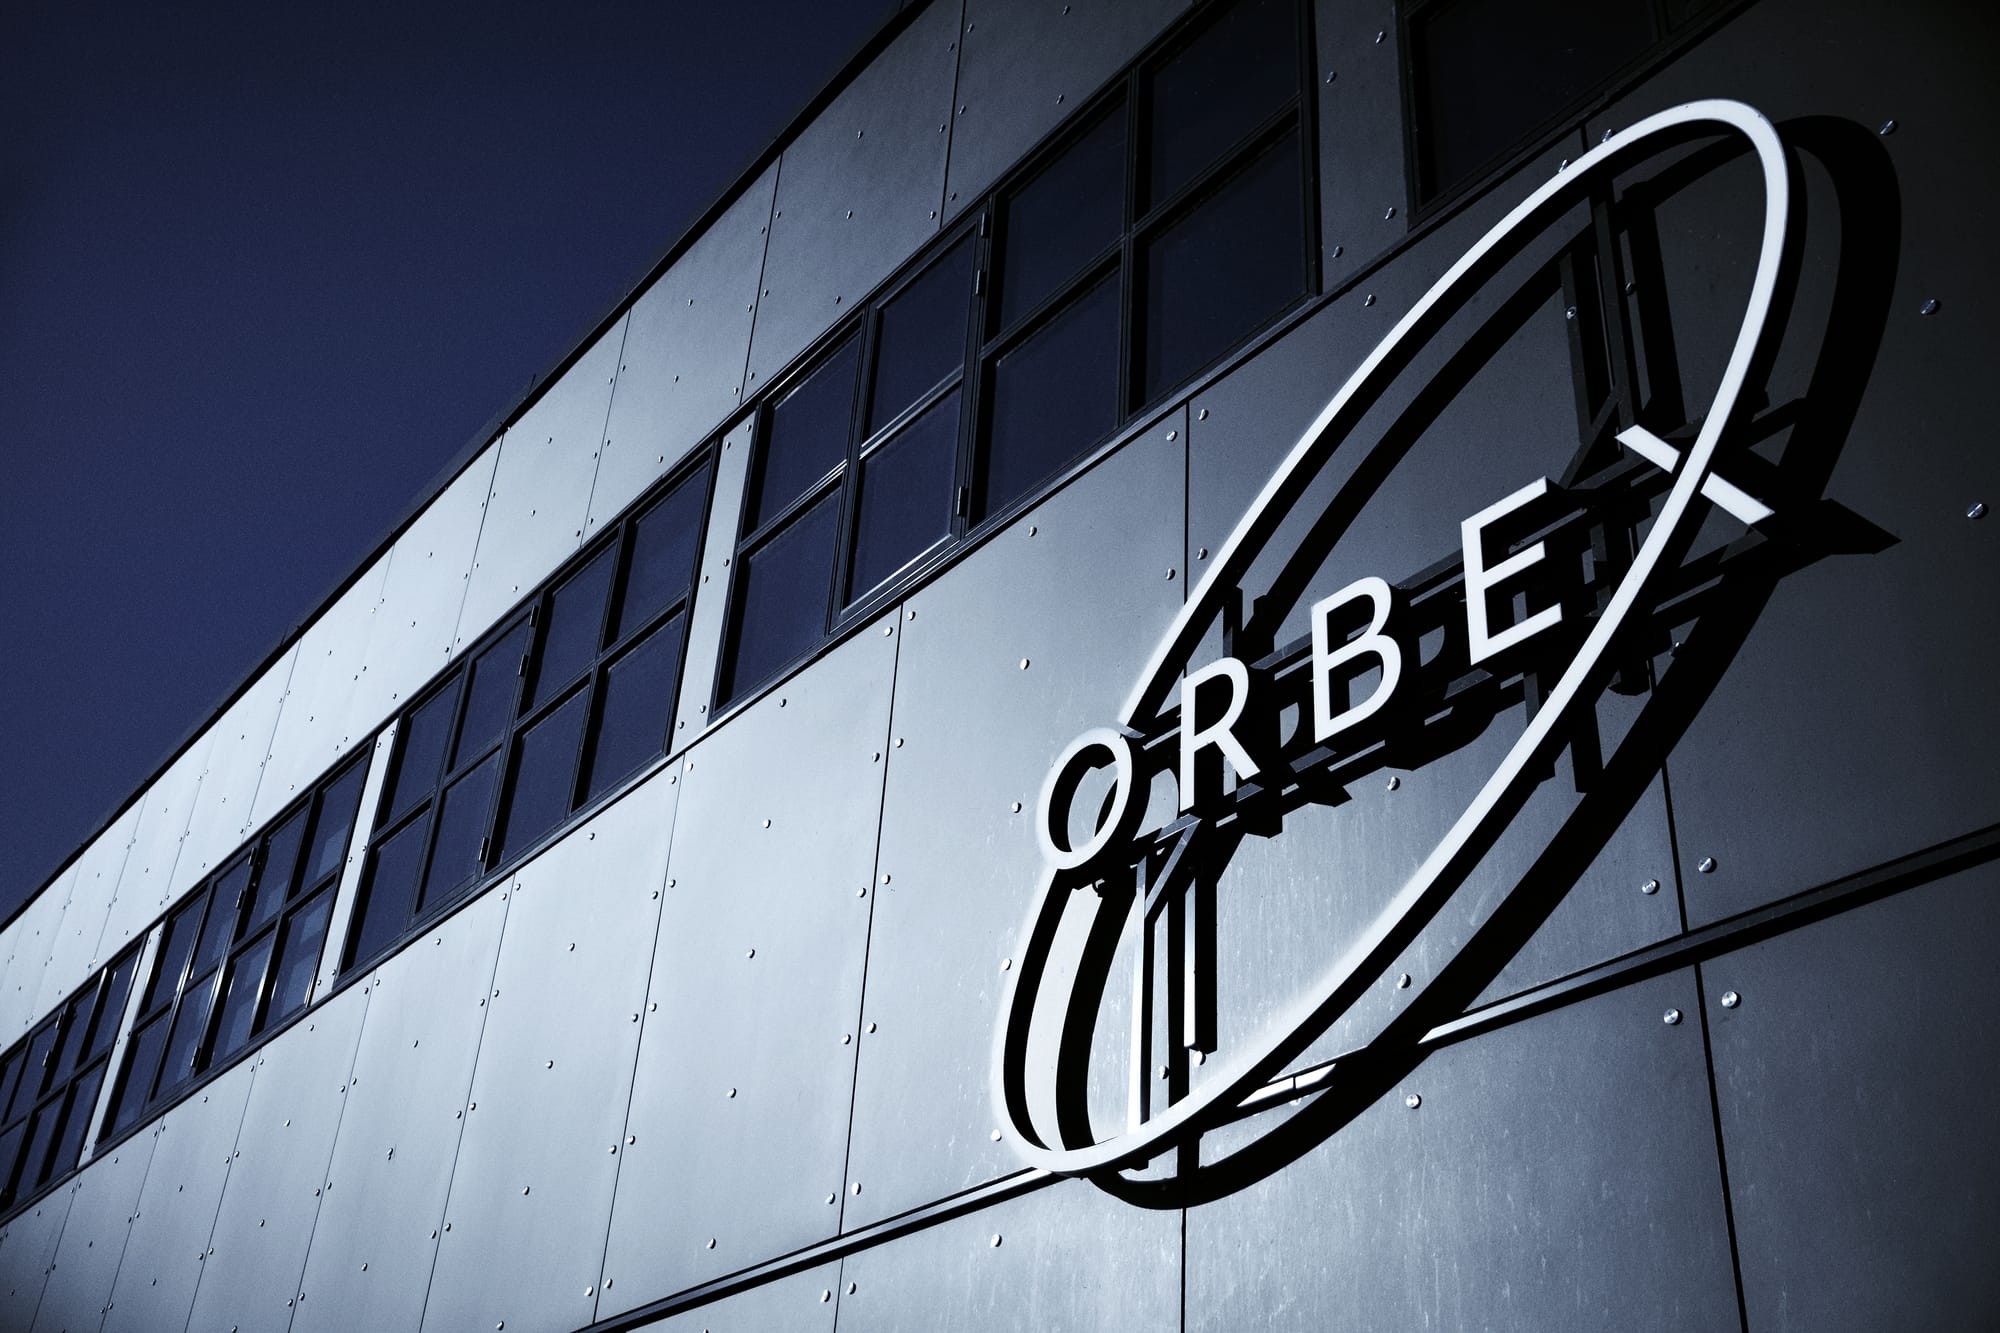 Orbex's facility in Denmark. ©Orbex